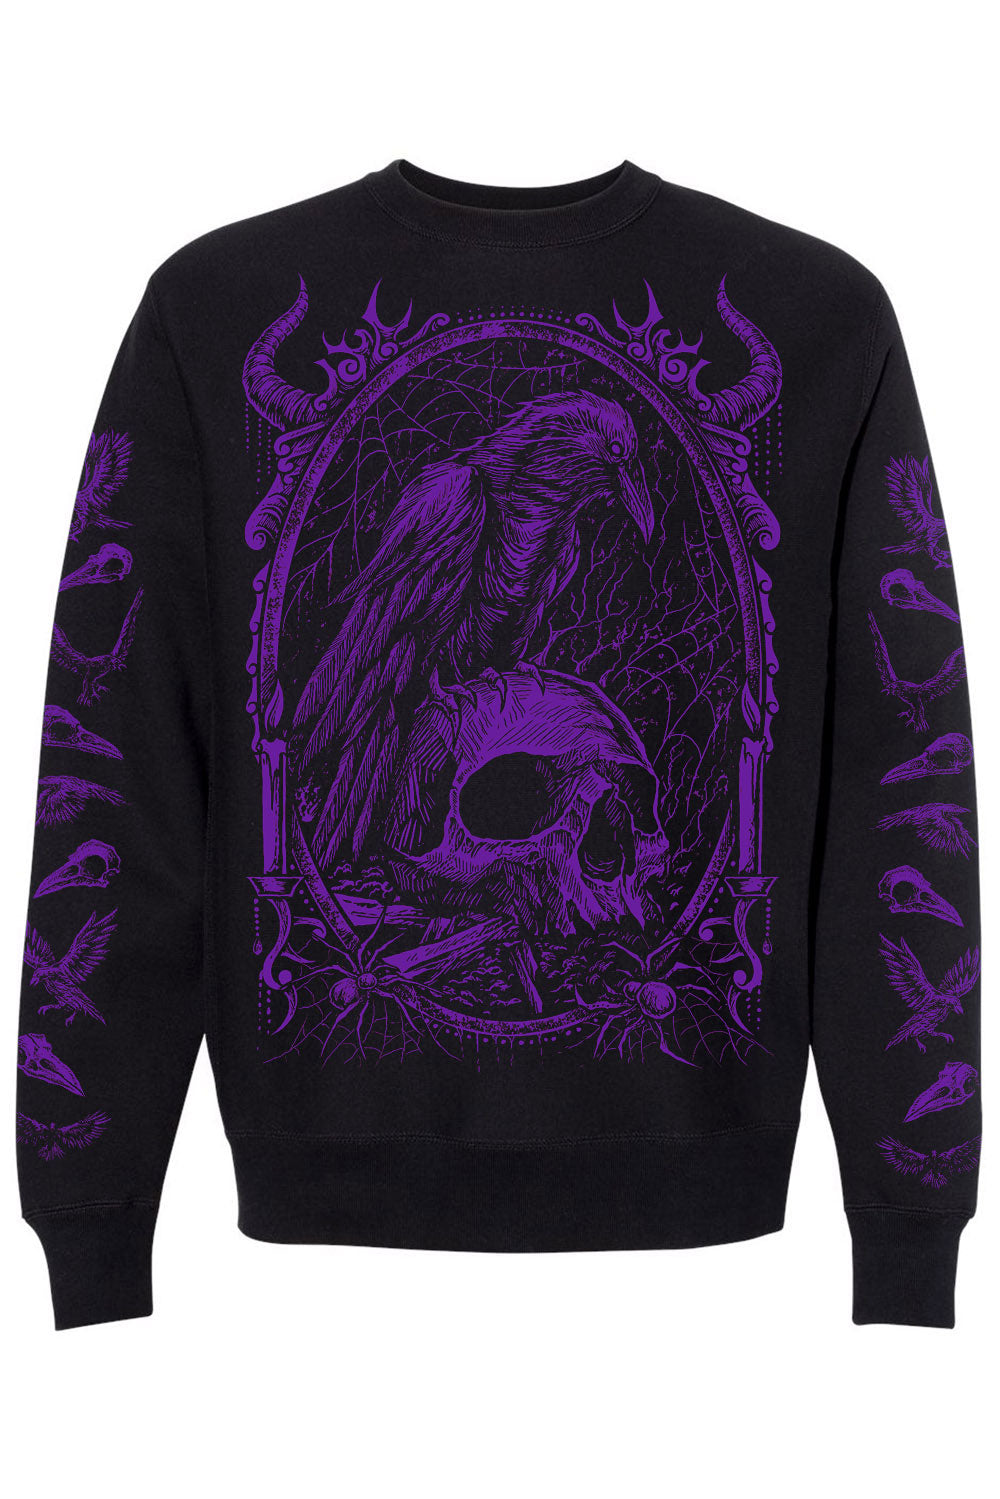 purple and black crow sweatshirt